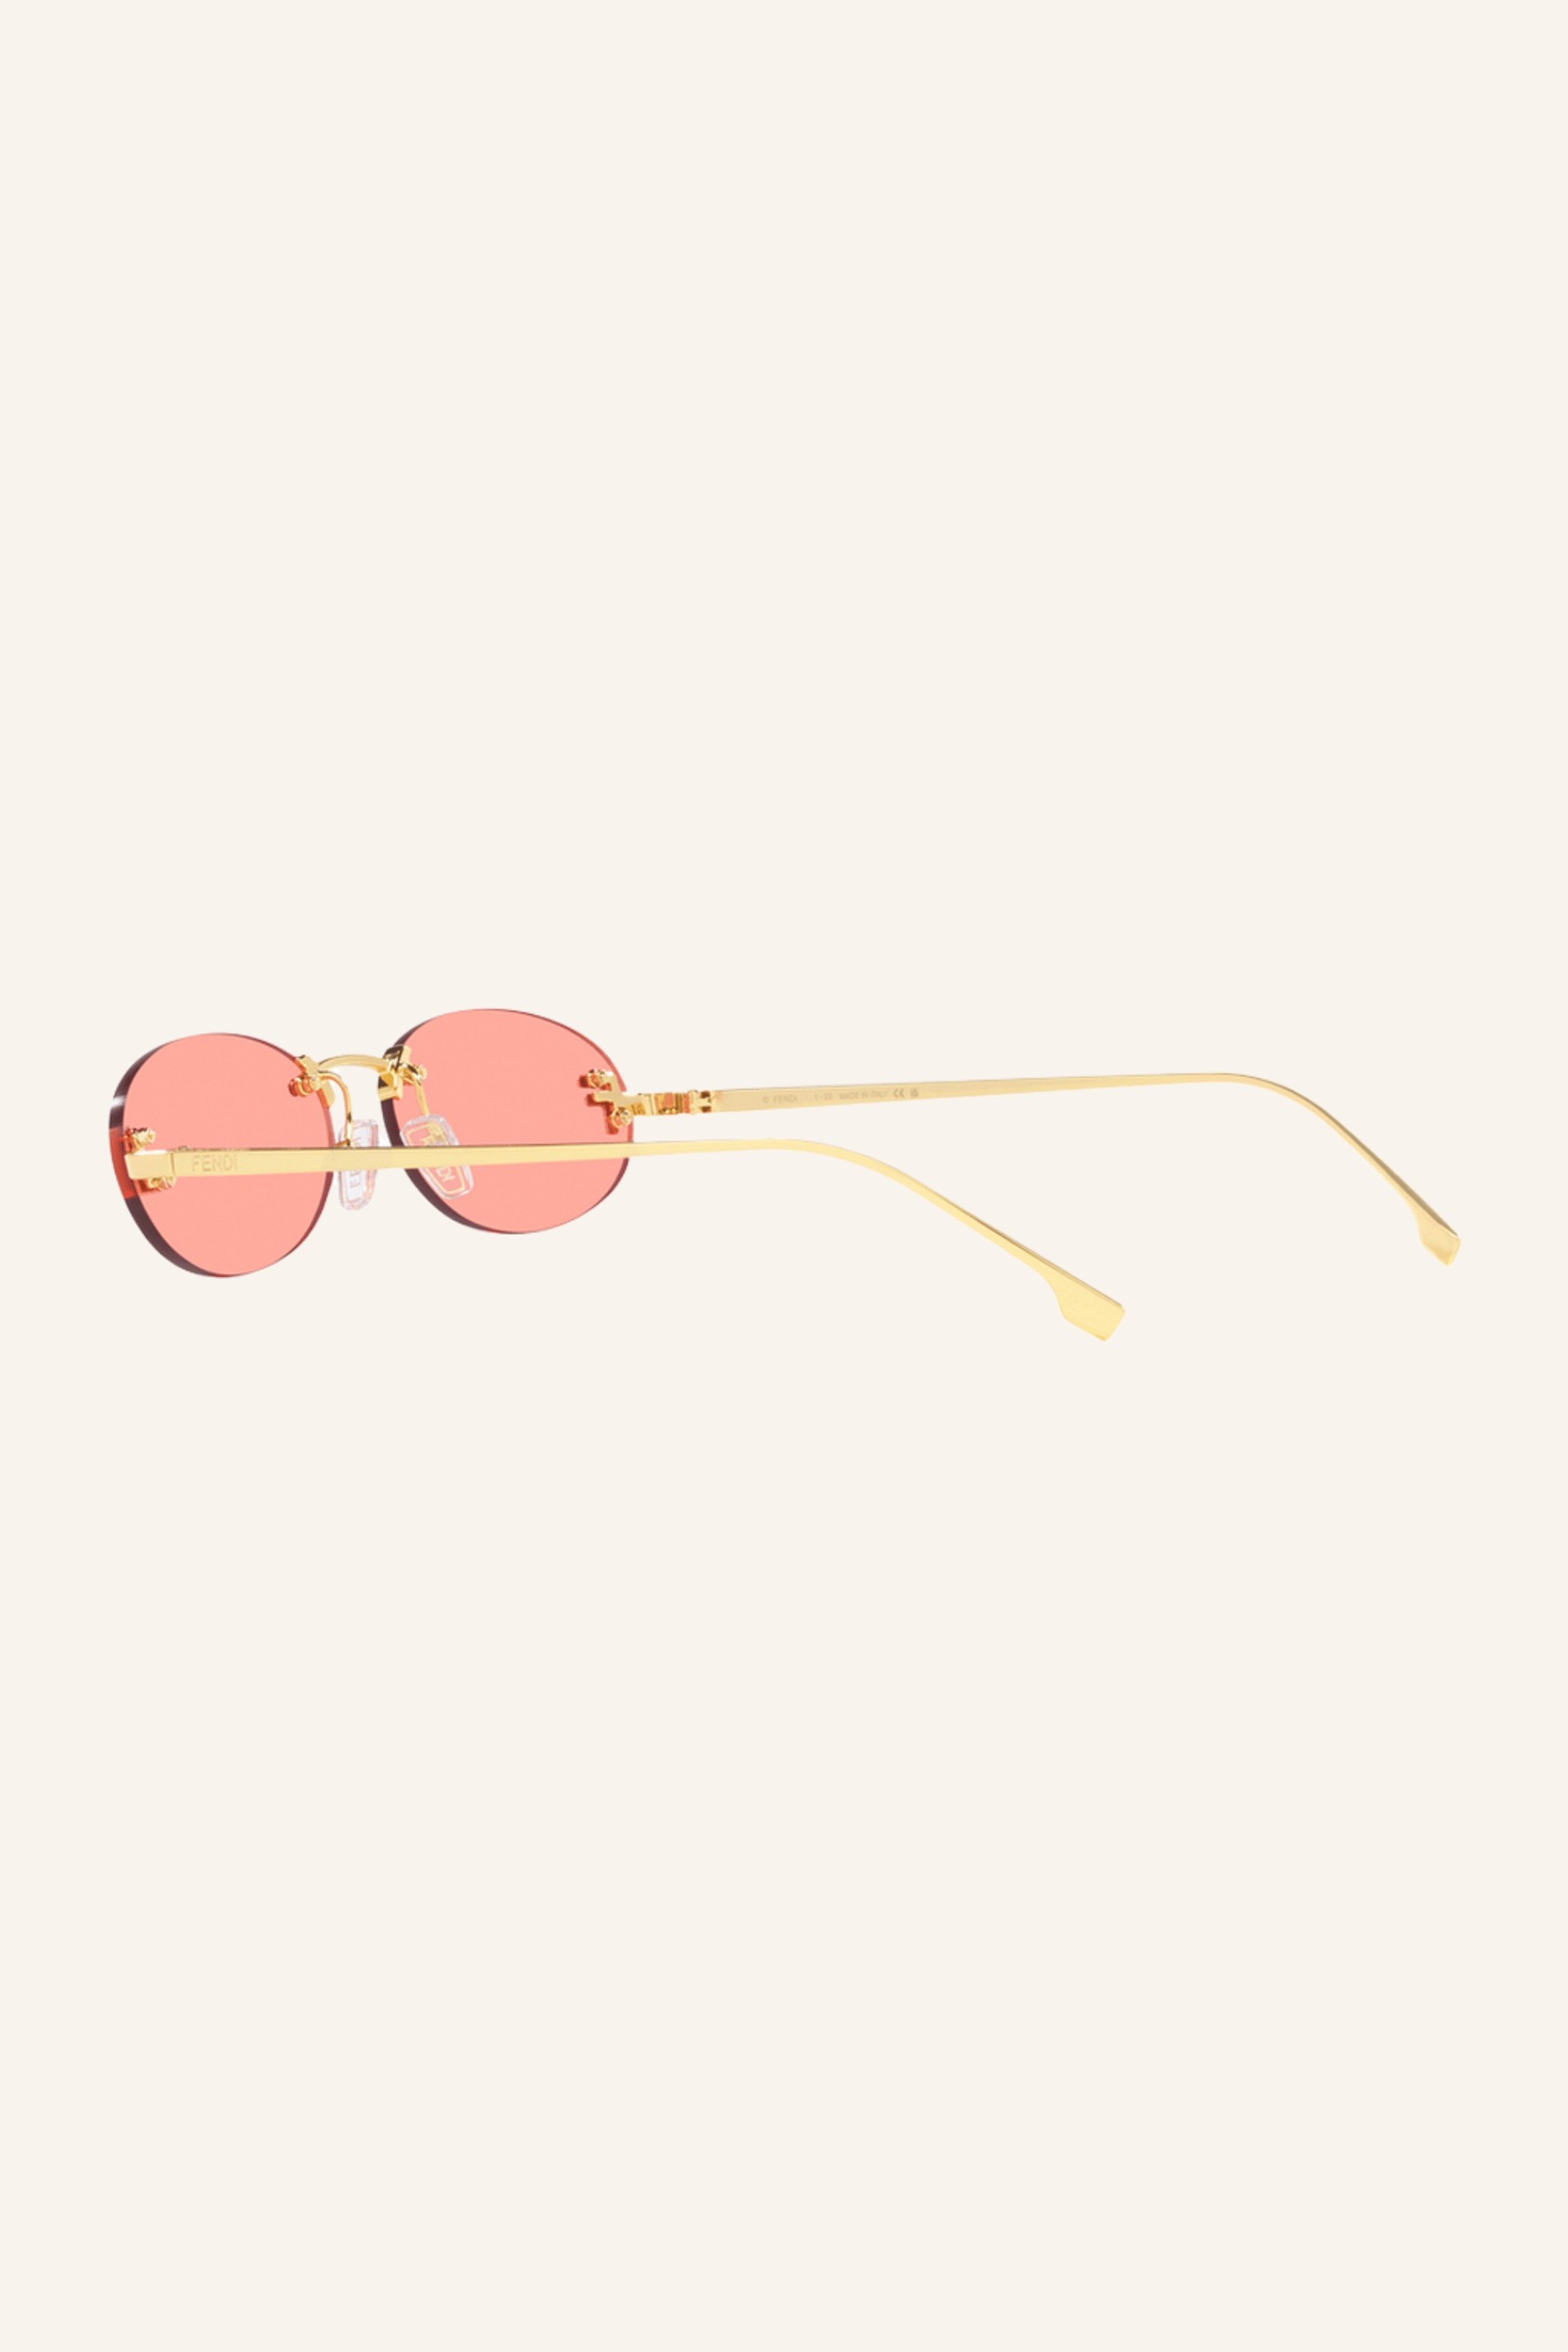 Fendi First Sunglasses - Gold Shiny